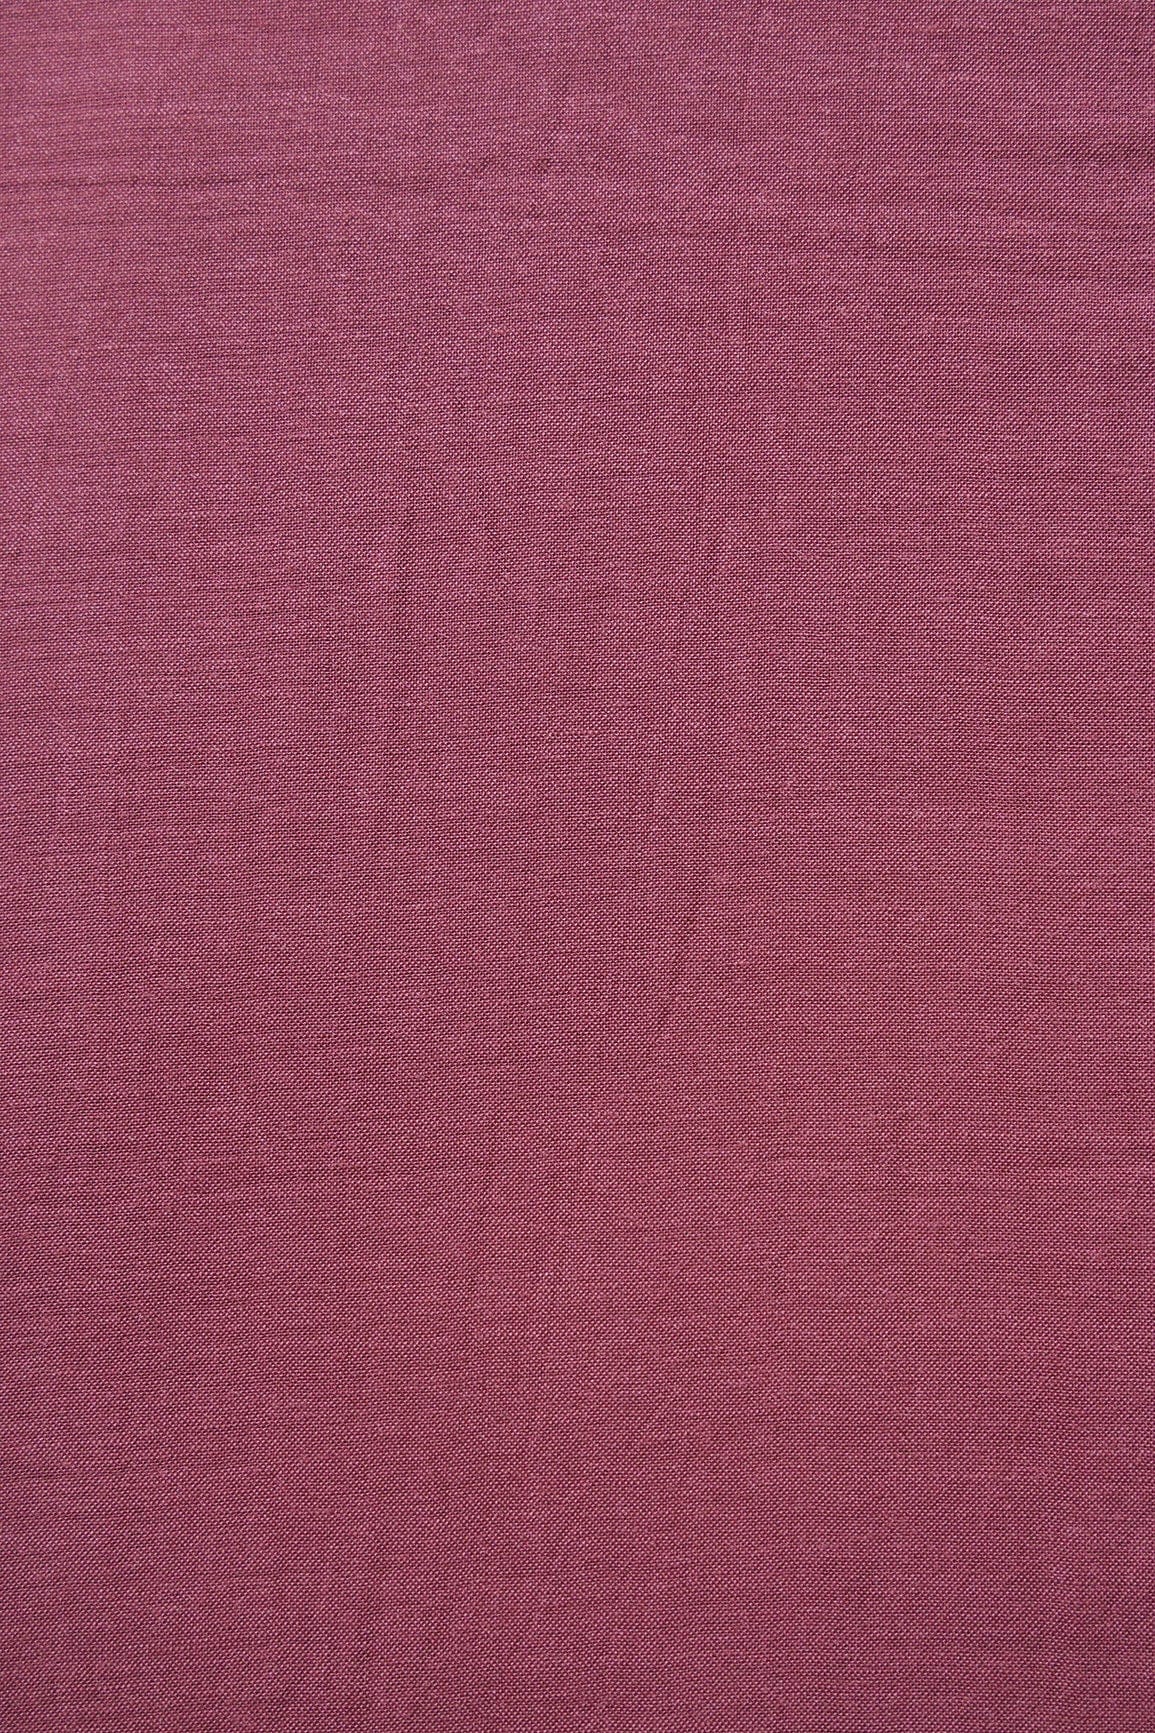 doeraa Plain Fabrics Onion Pink Dyed Muslin Fabric